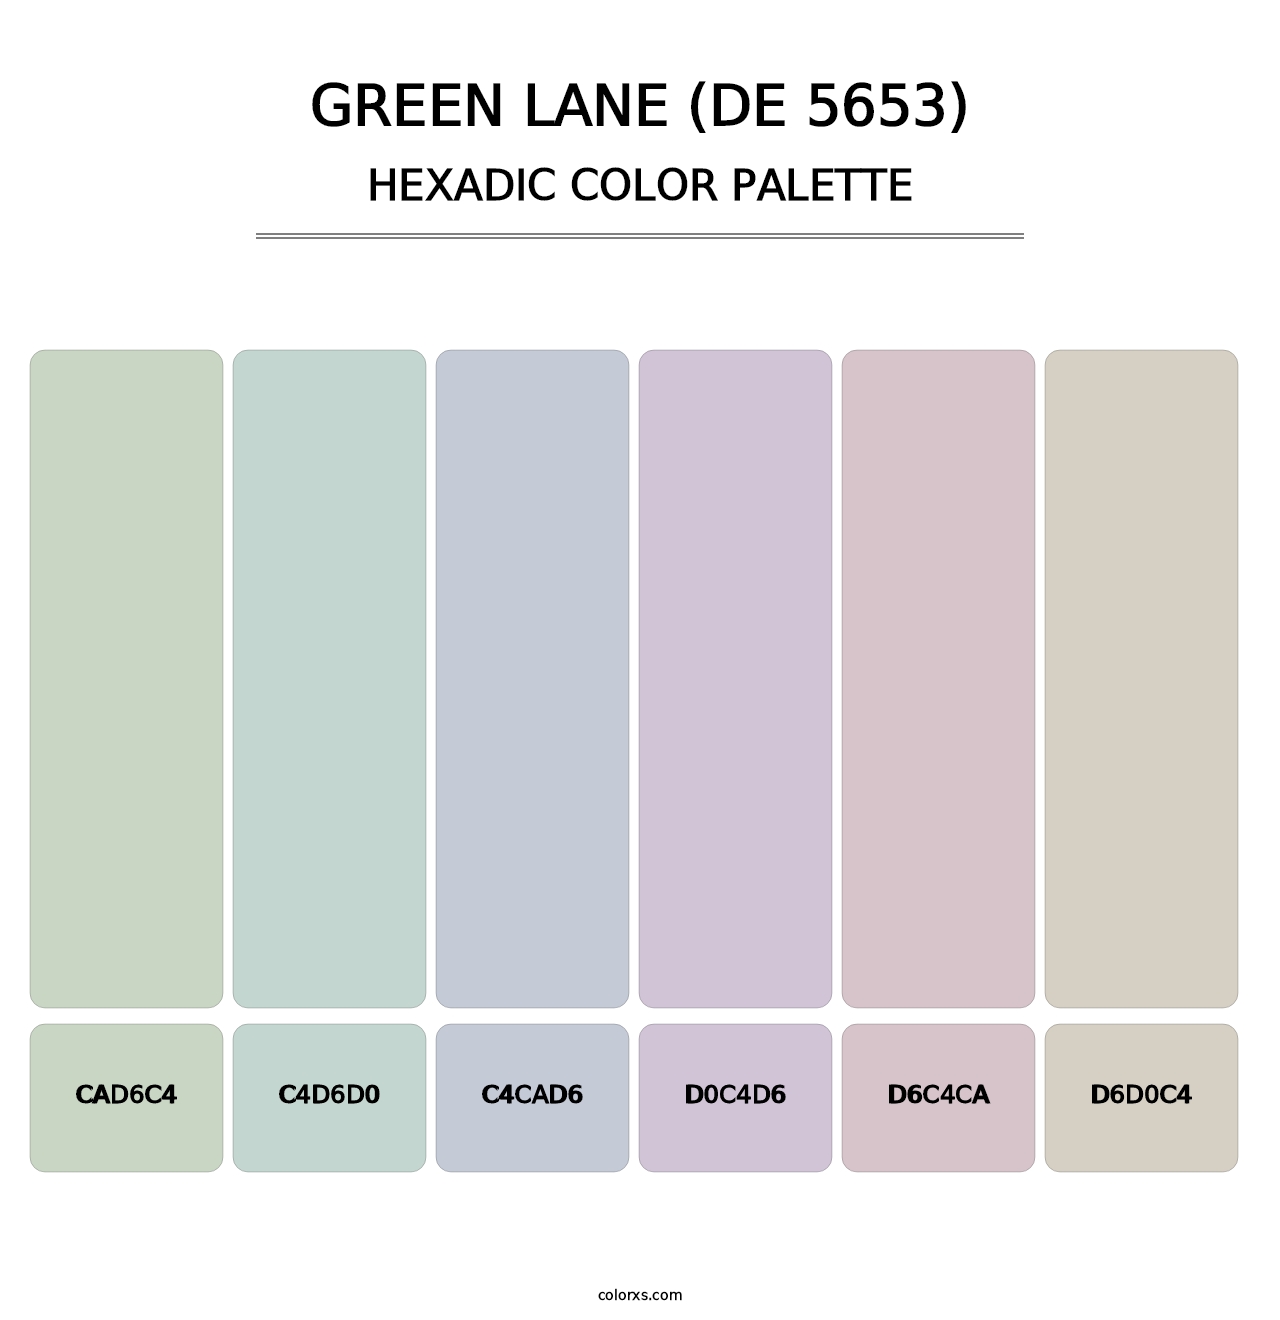 Green Lane (DE 5653) - Hexadic Color Palette